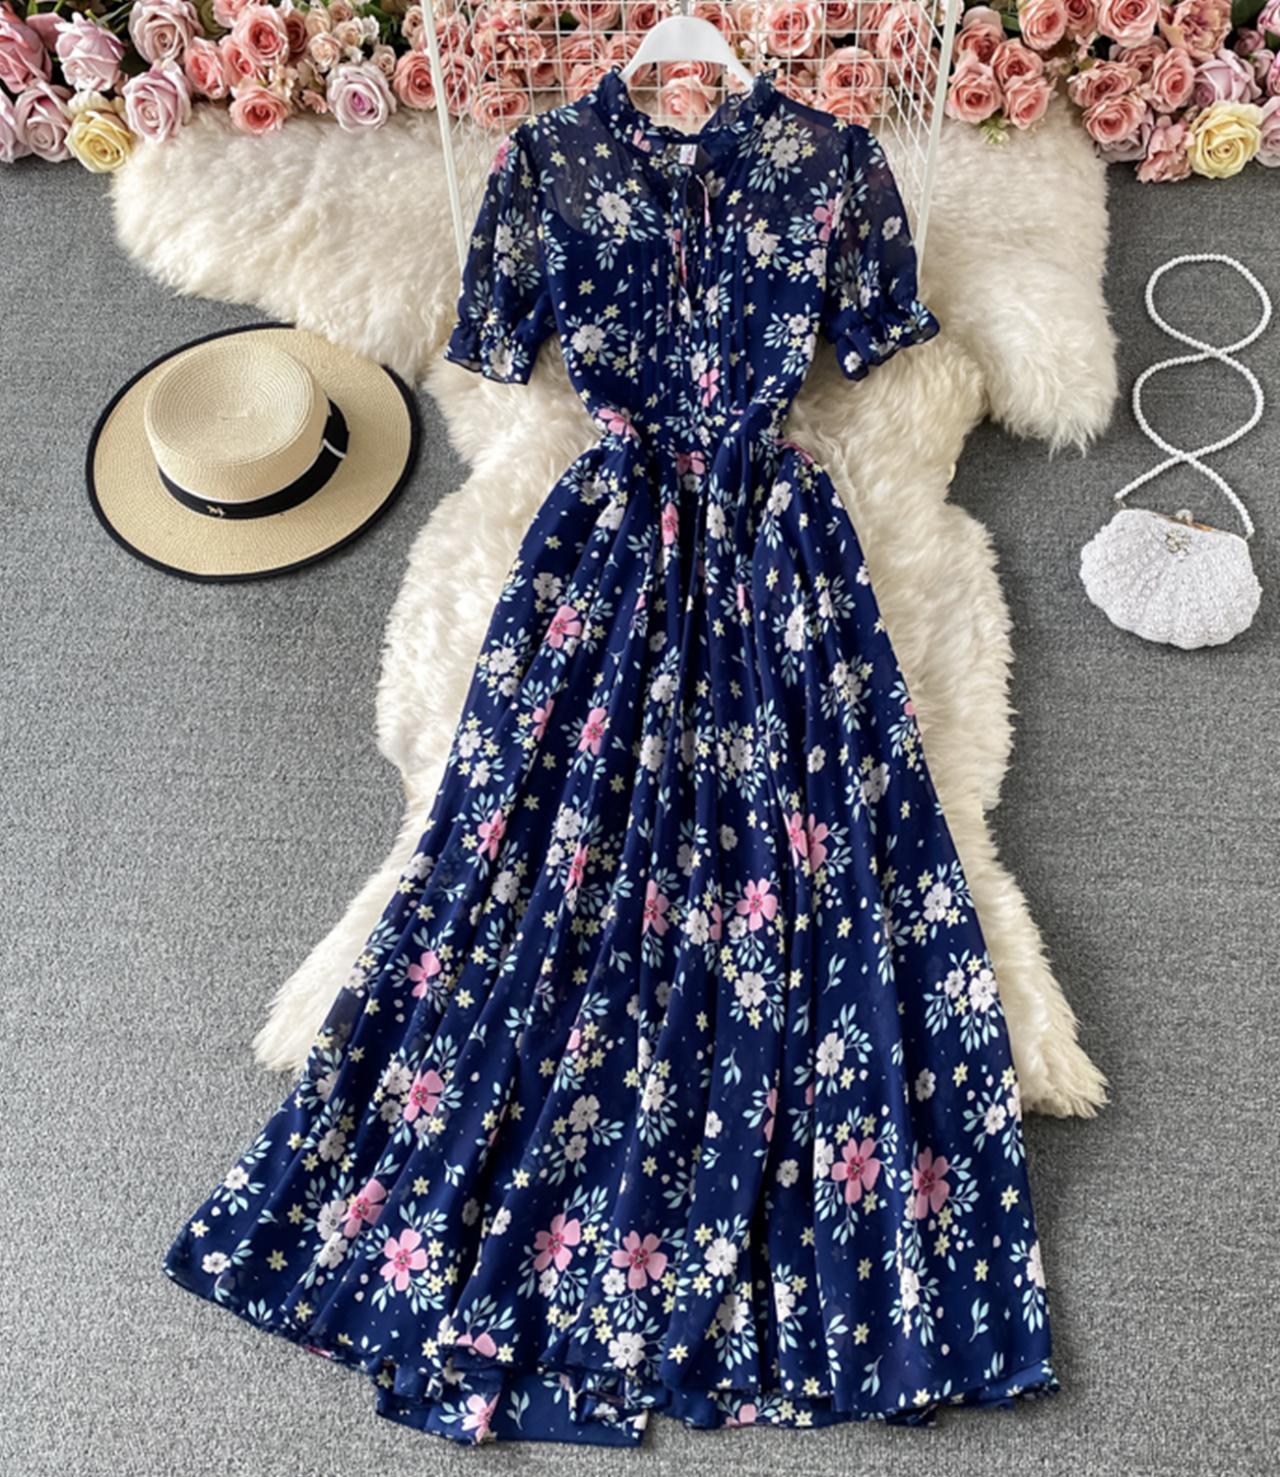 Cute Chiffon Floral Dress Fashion Dress